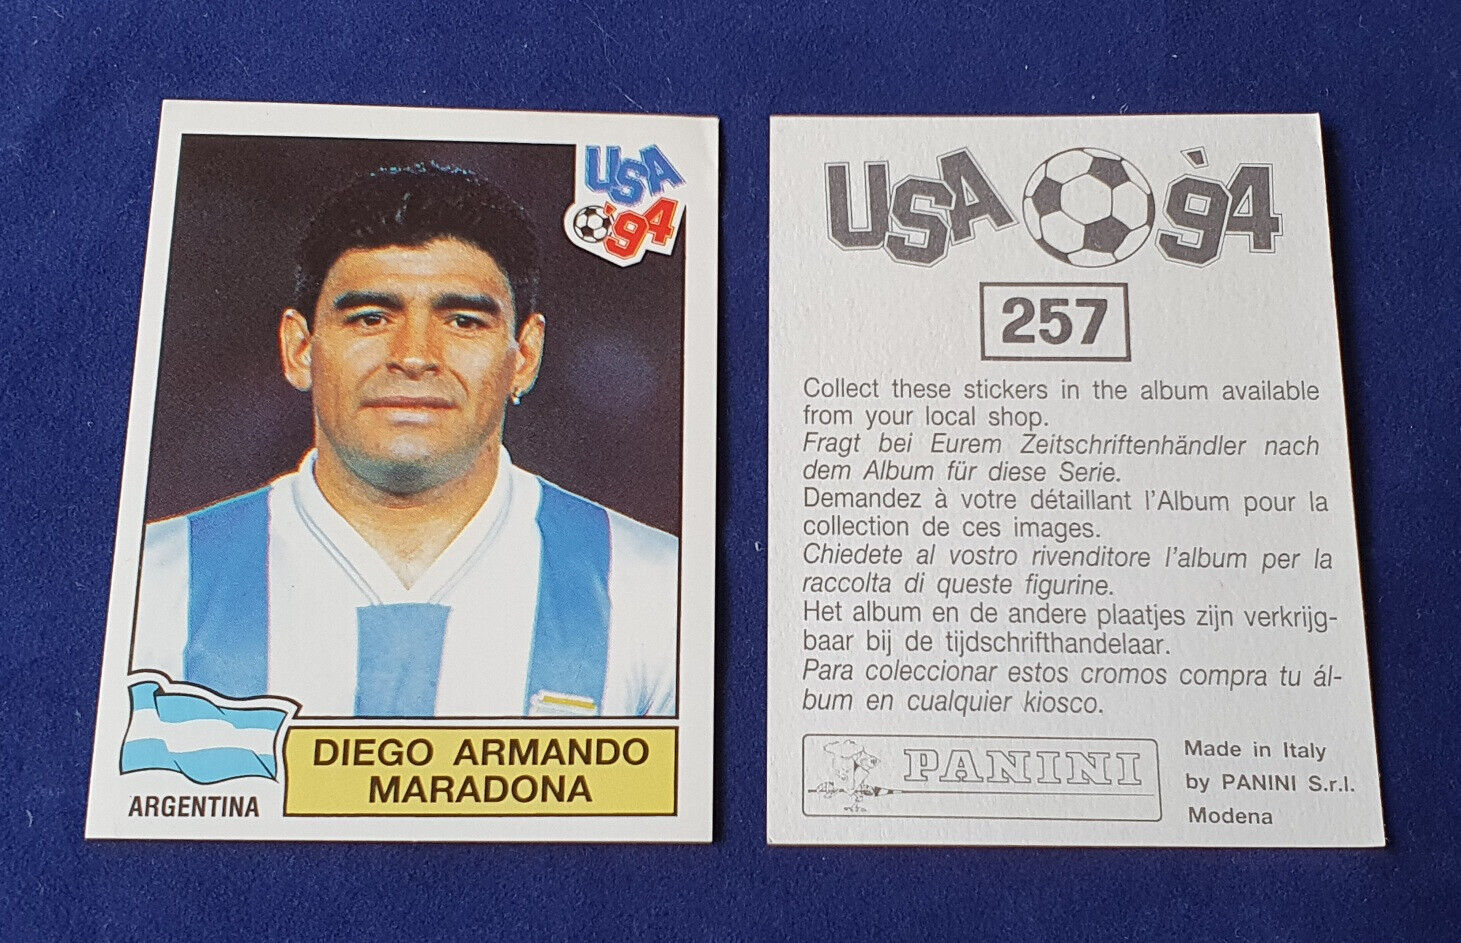 1994 World Cup USA 94 Panini World Cup, Sticker of Diego Maradona #257, Int. version